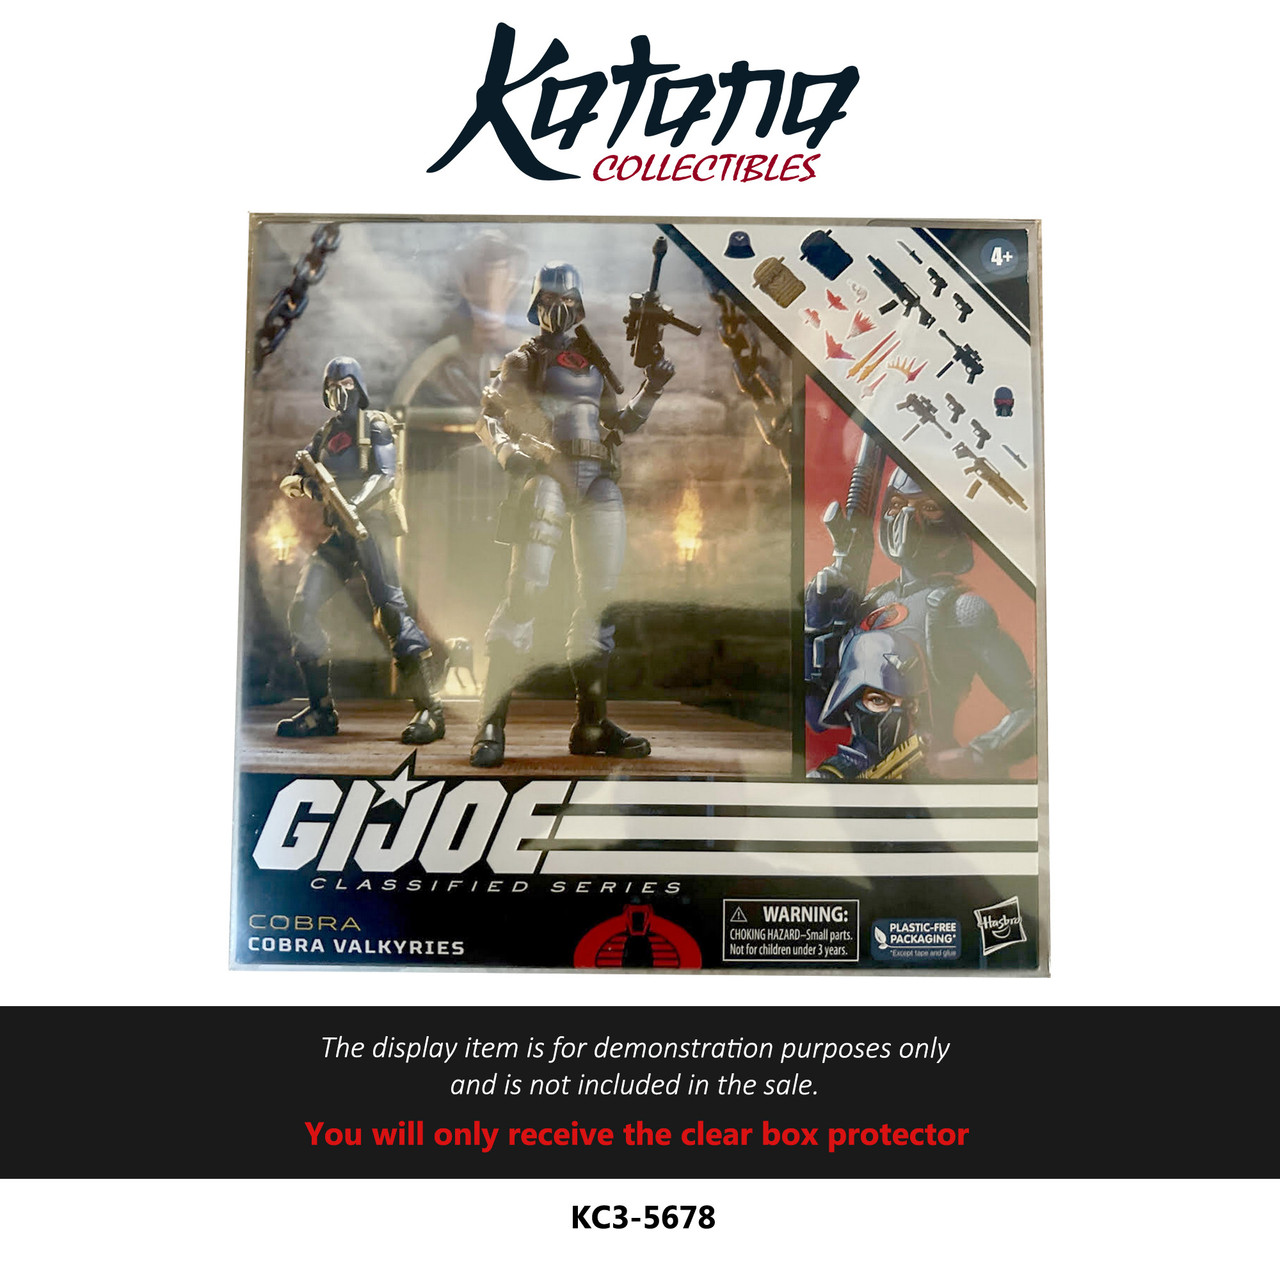 Katana Collectibles Protector For G.I. Joe Classified Series - Cobra Valkyries